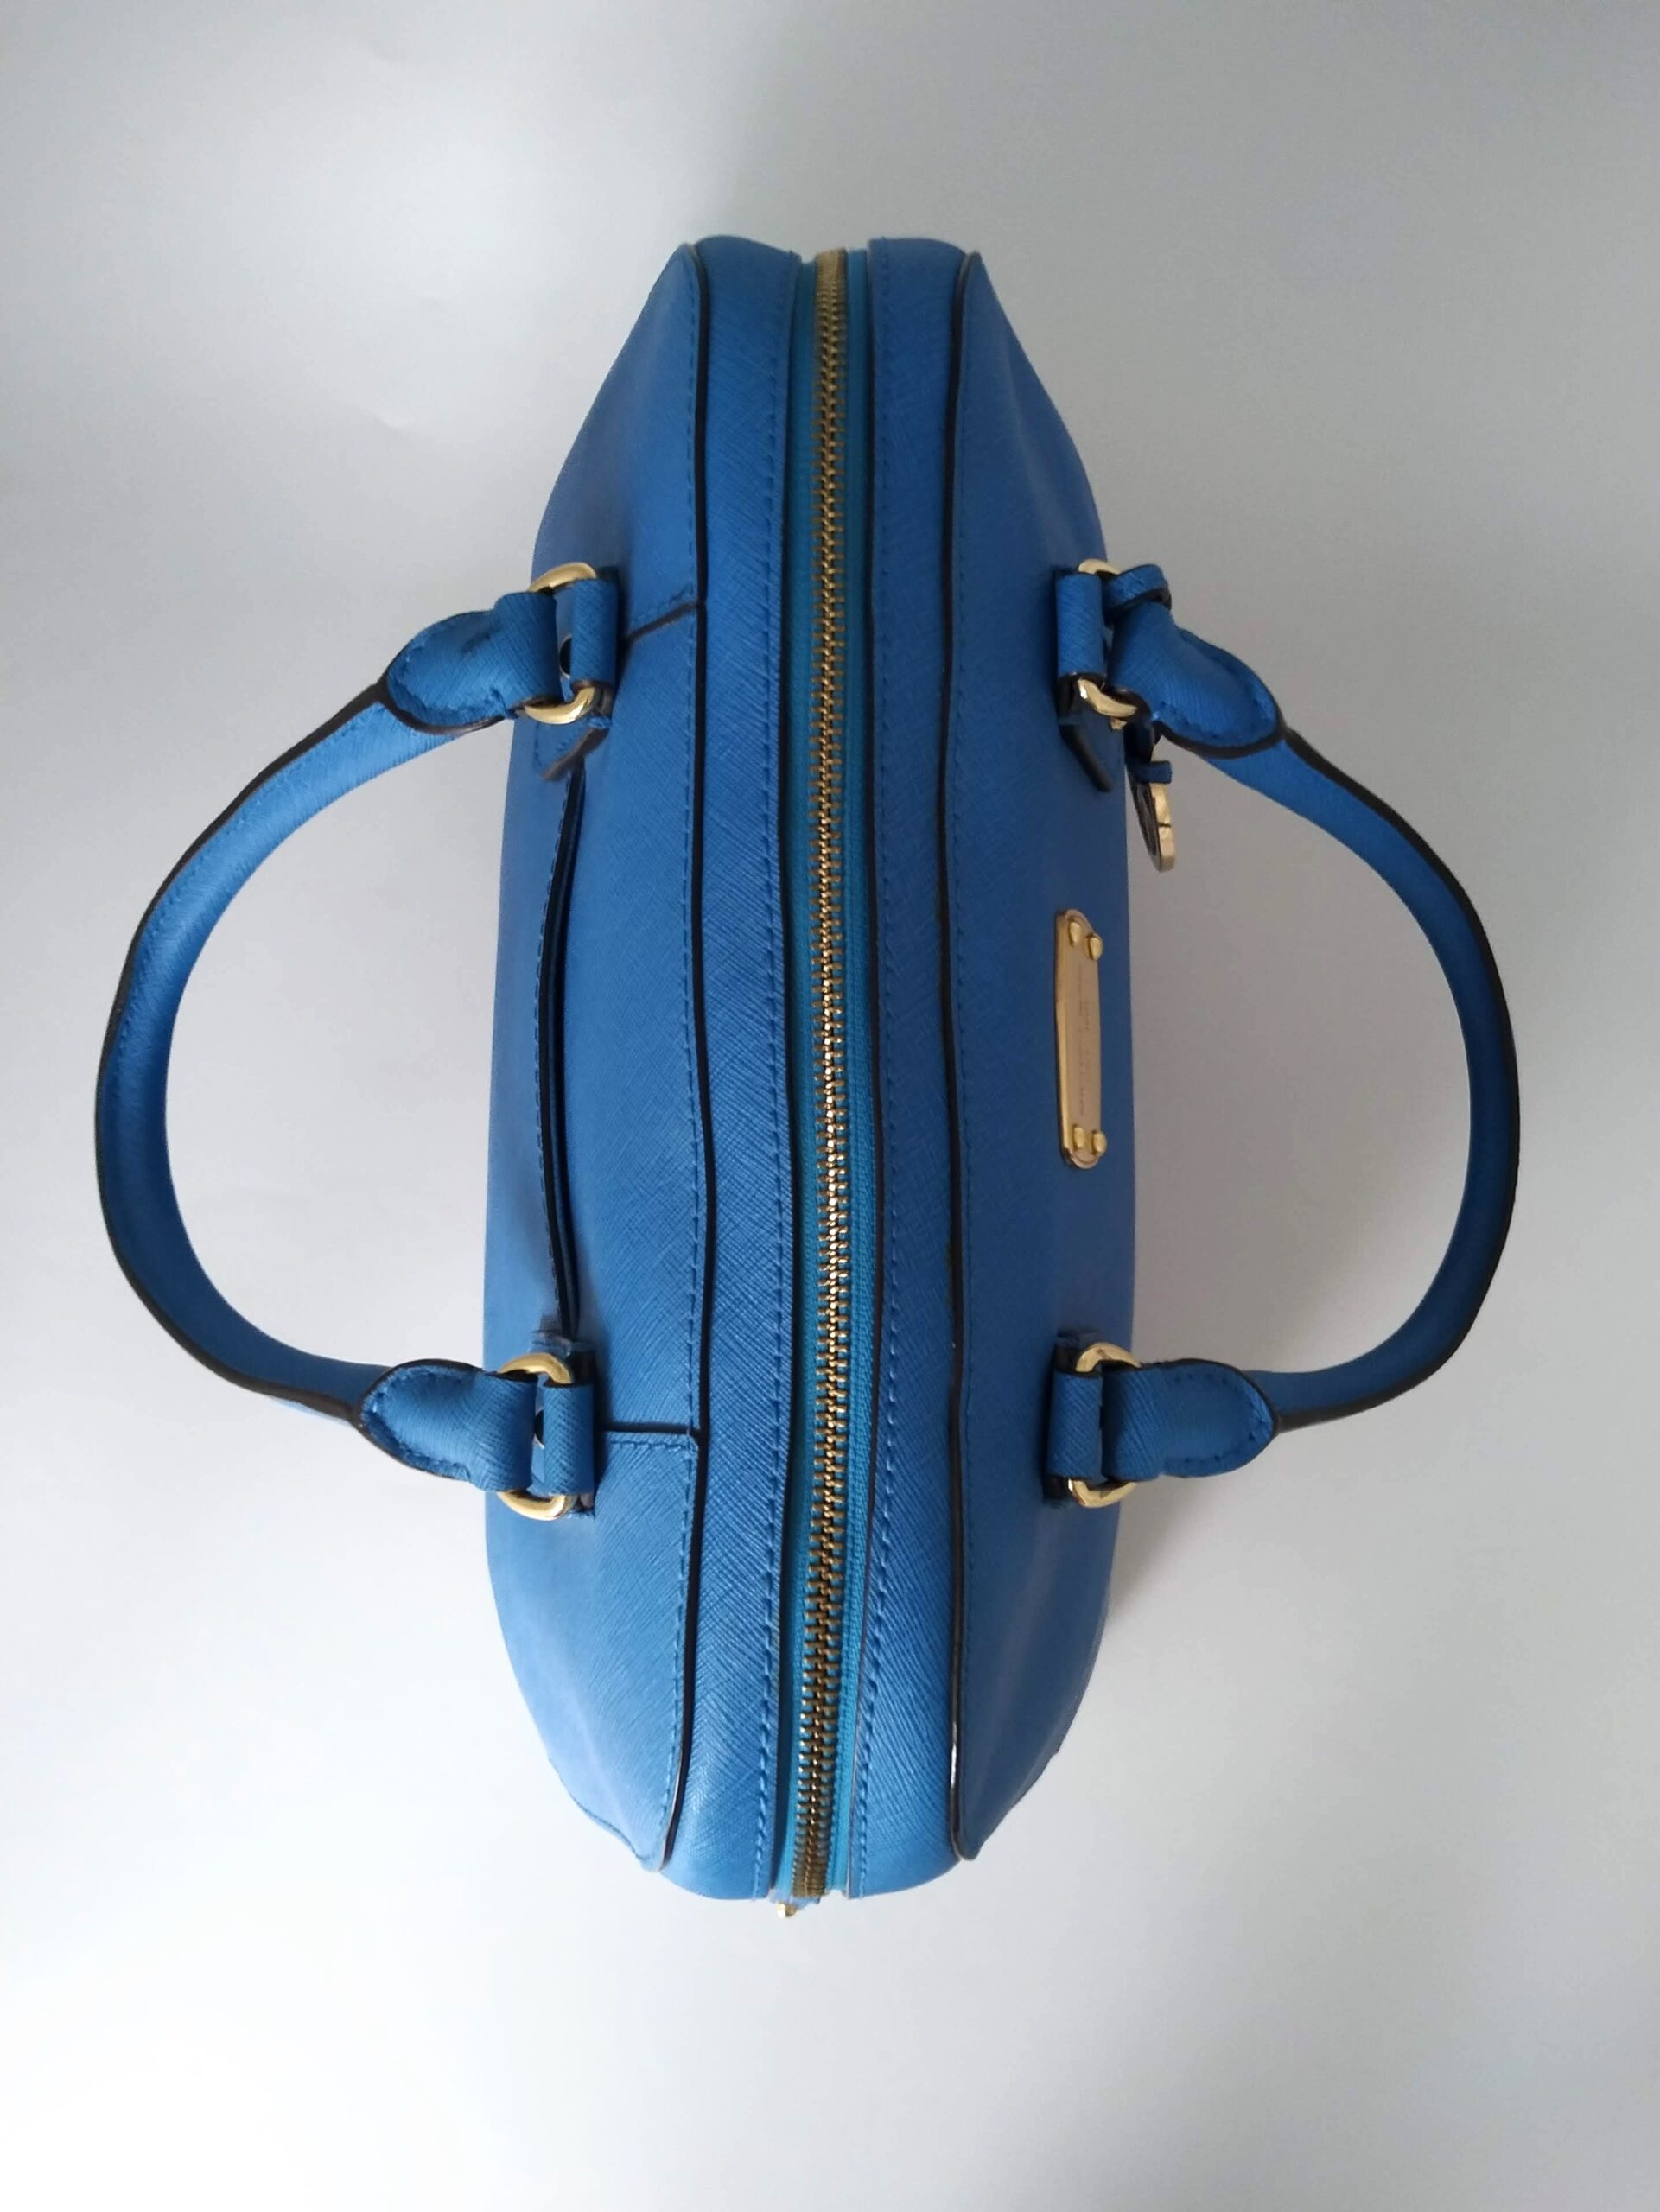 MK Michael Kors Boston Large Satchel Bright Blue Saffiano Leather Bag -  Earth Luxury